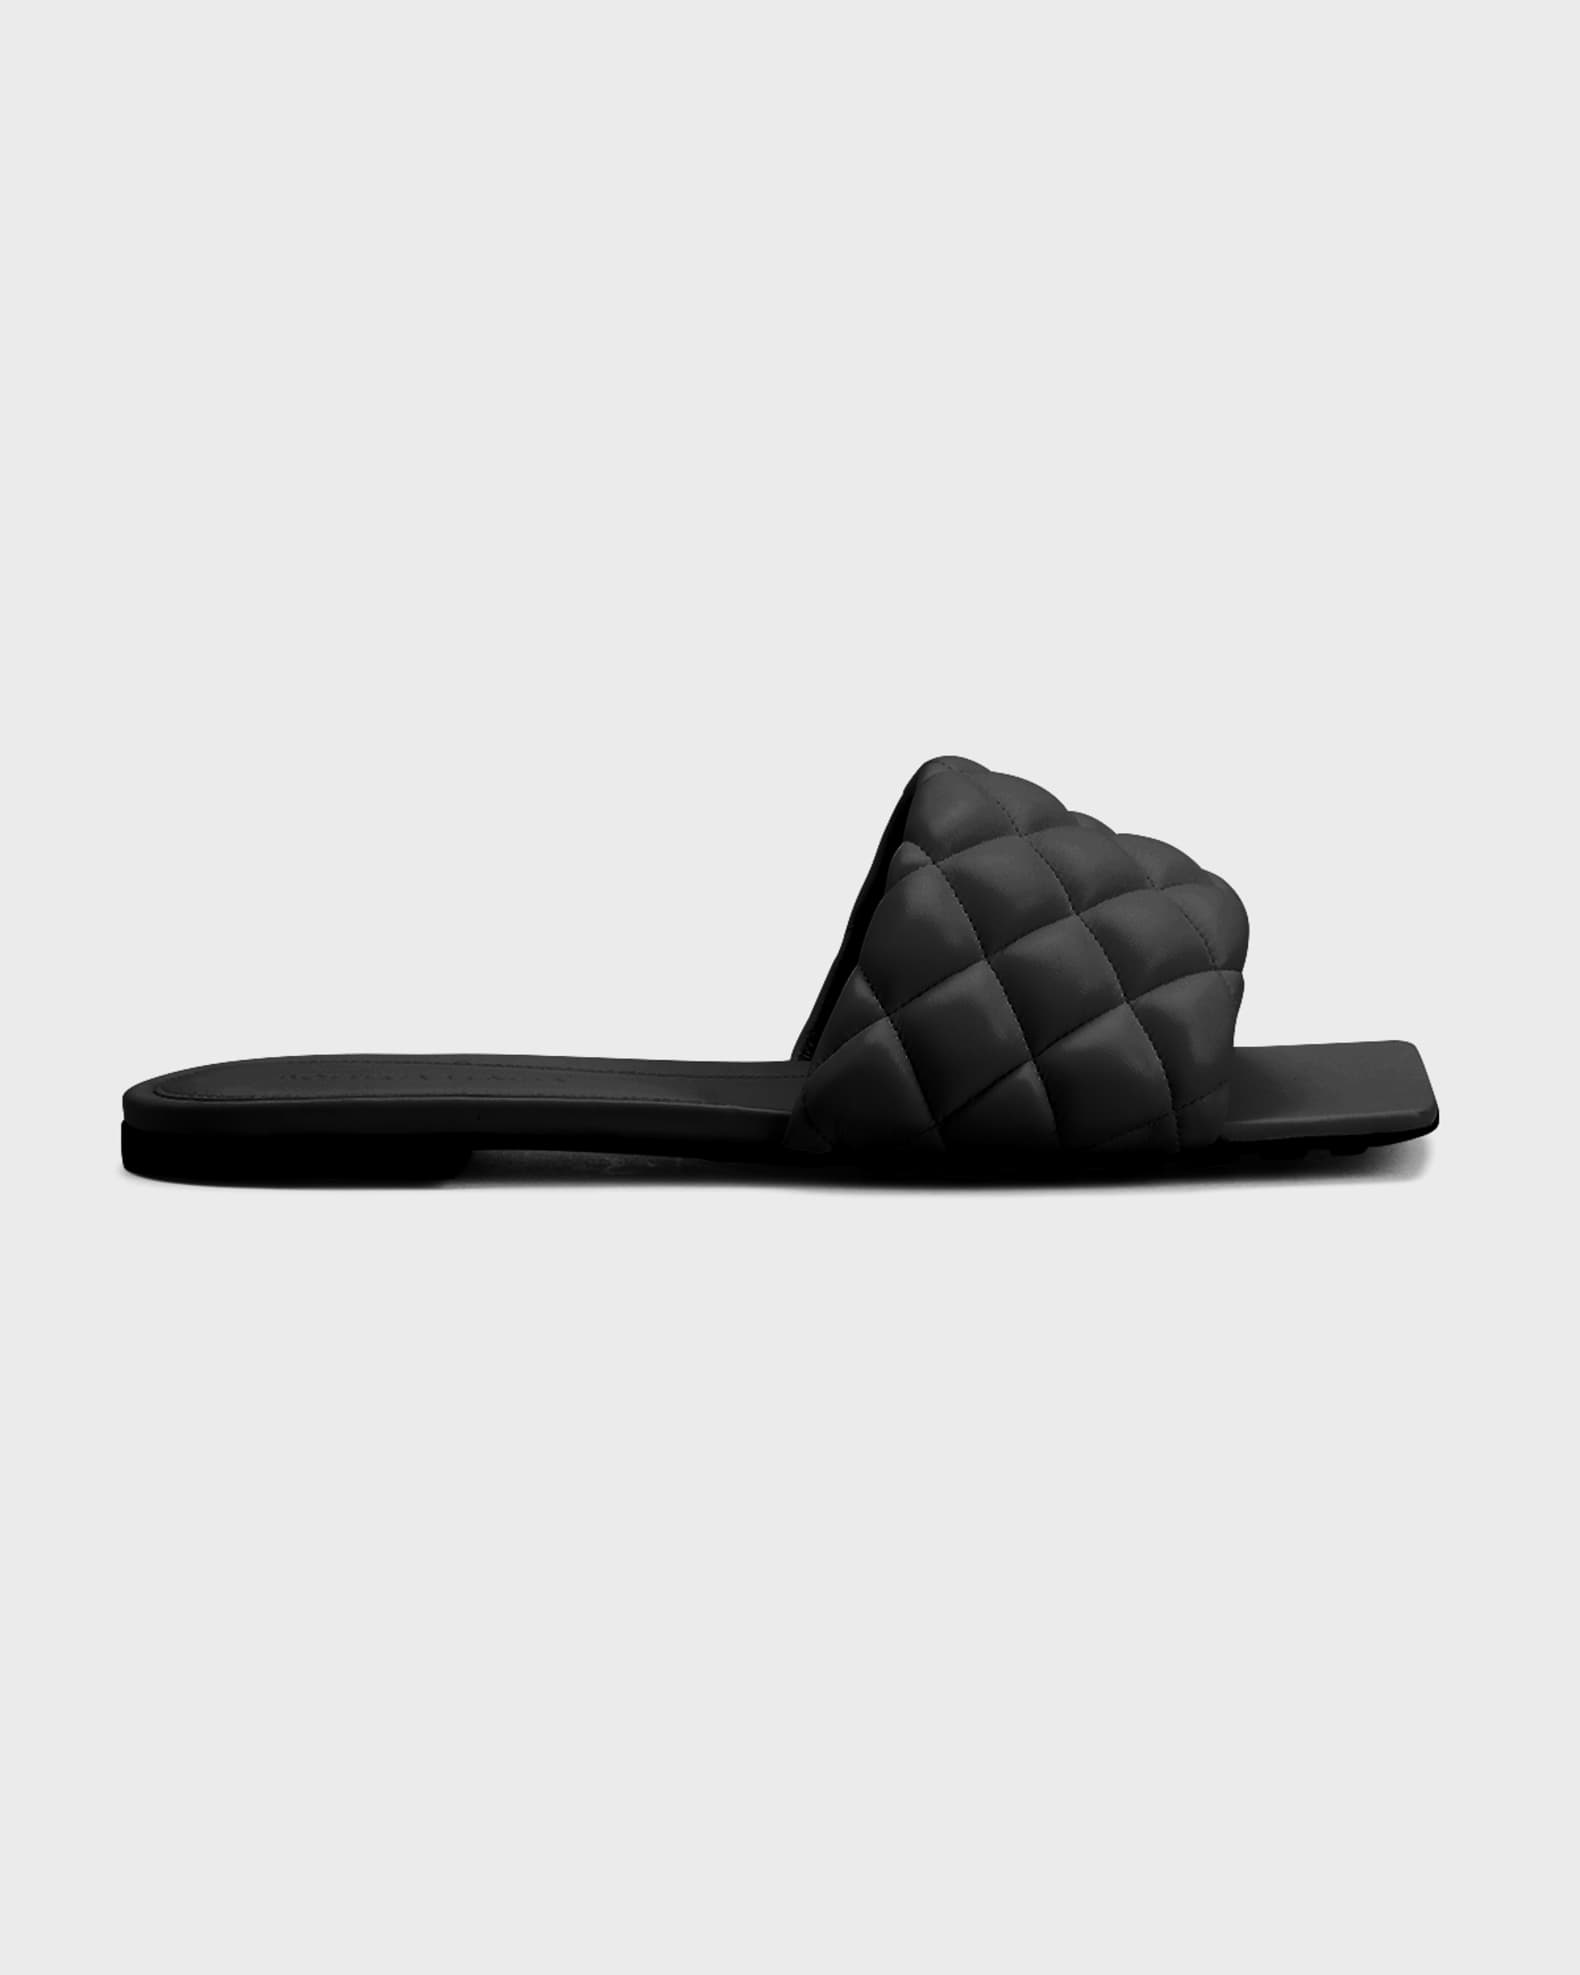 Bottega Veneta Women's Padded Leather Flat Sandals - Black - Size 6